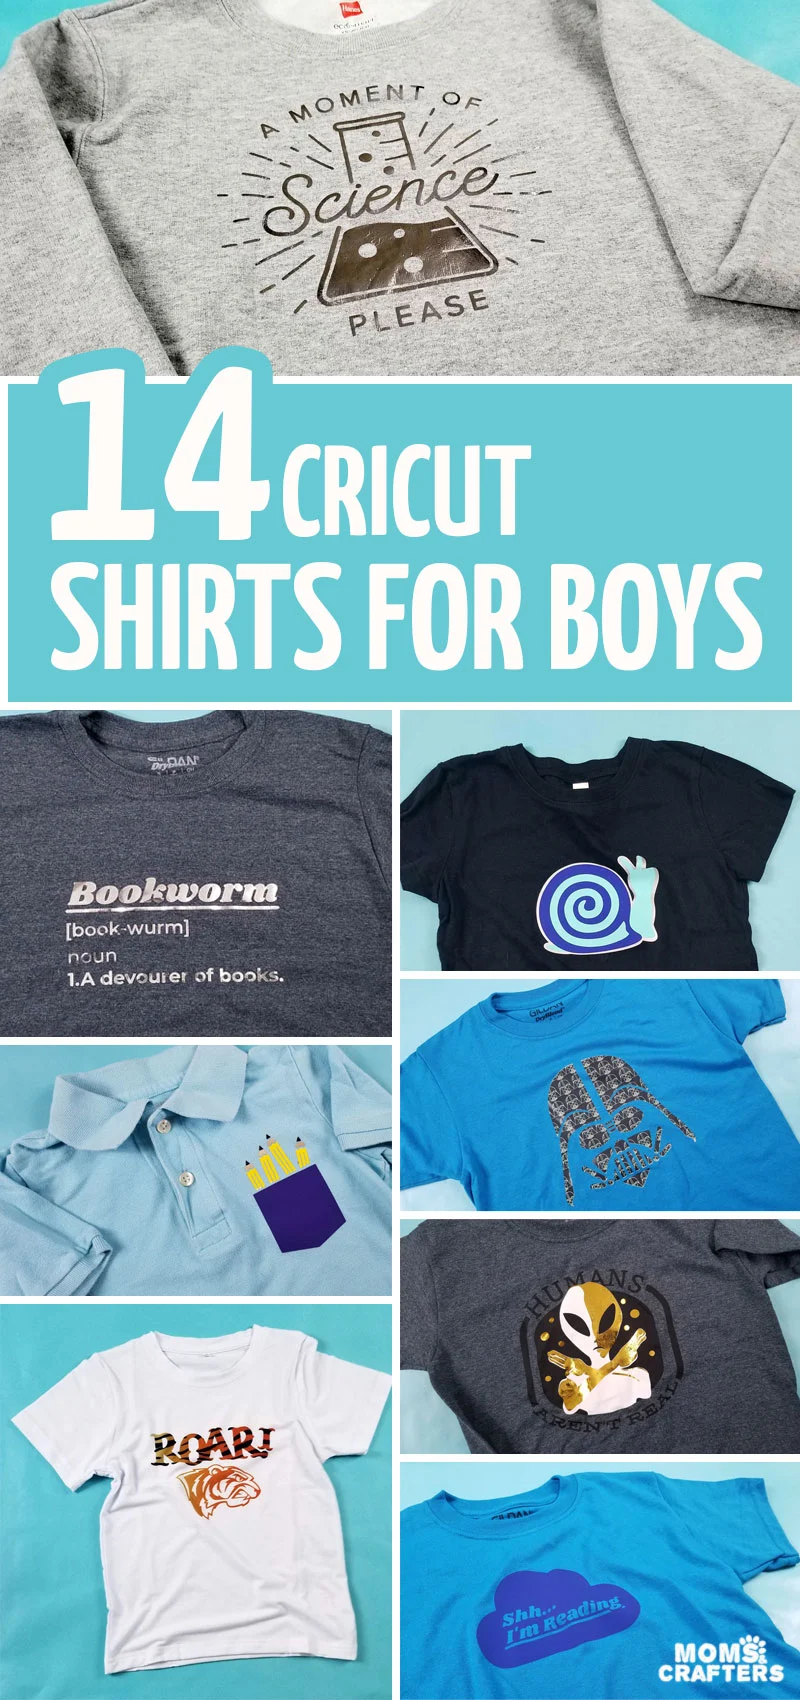 Cricut Shirt Ideas for boys collage